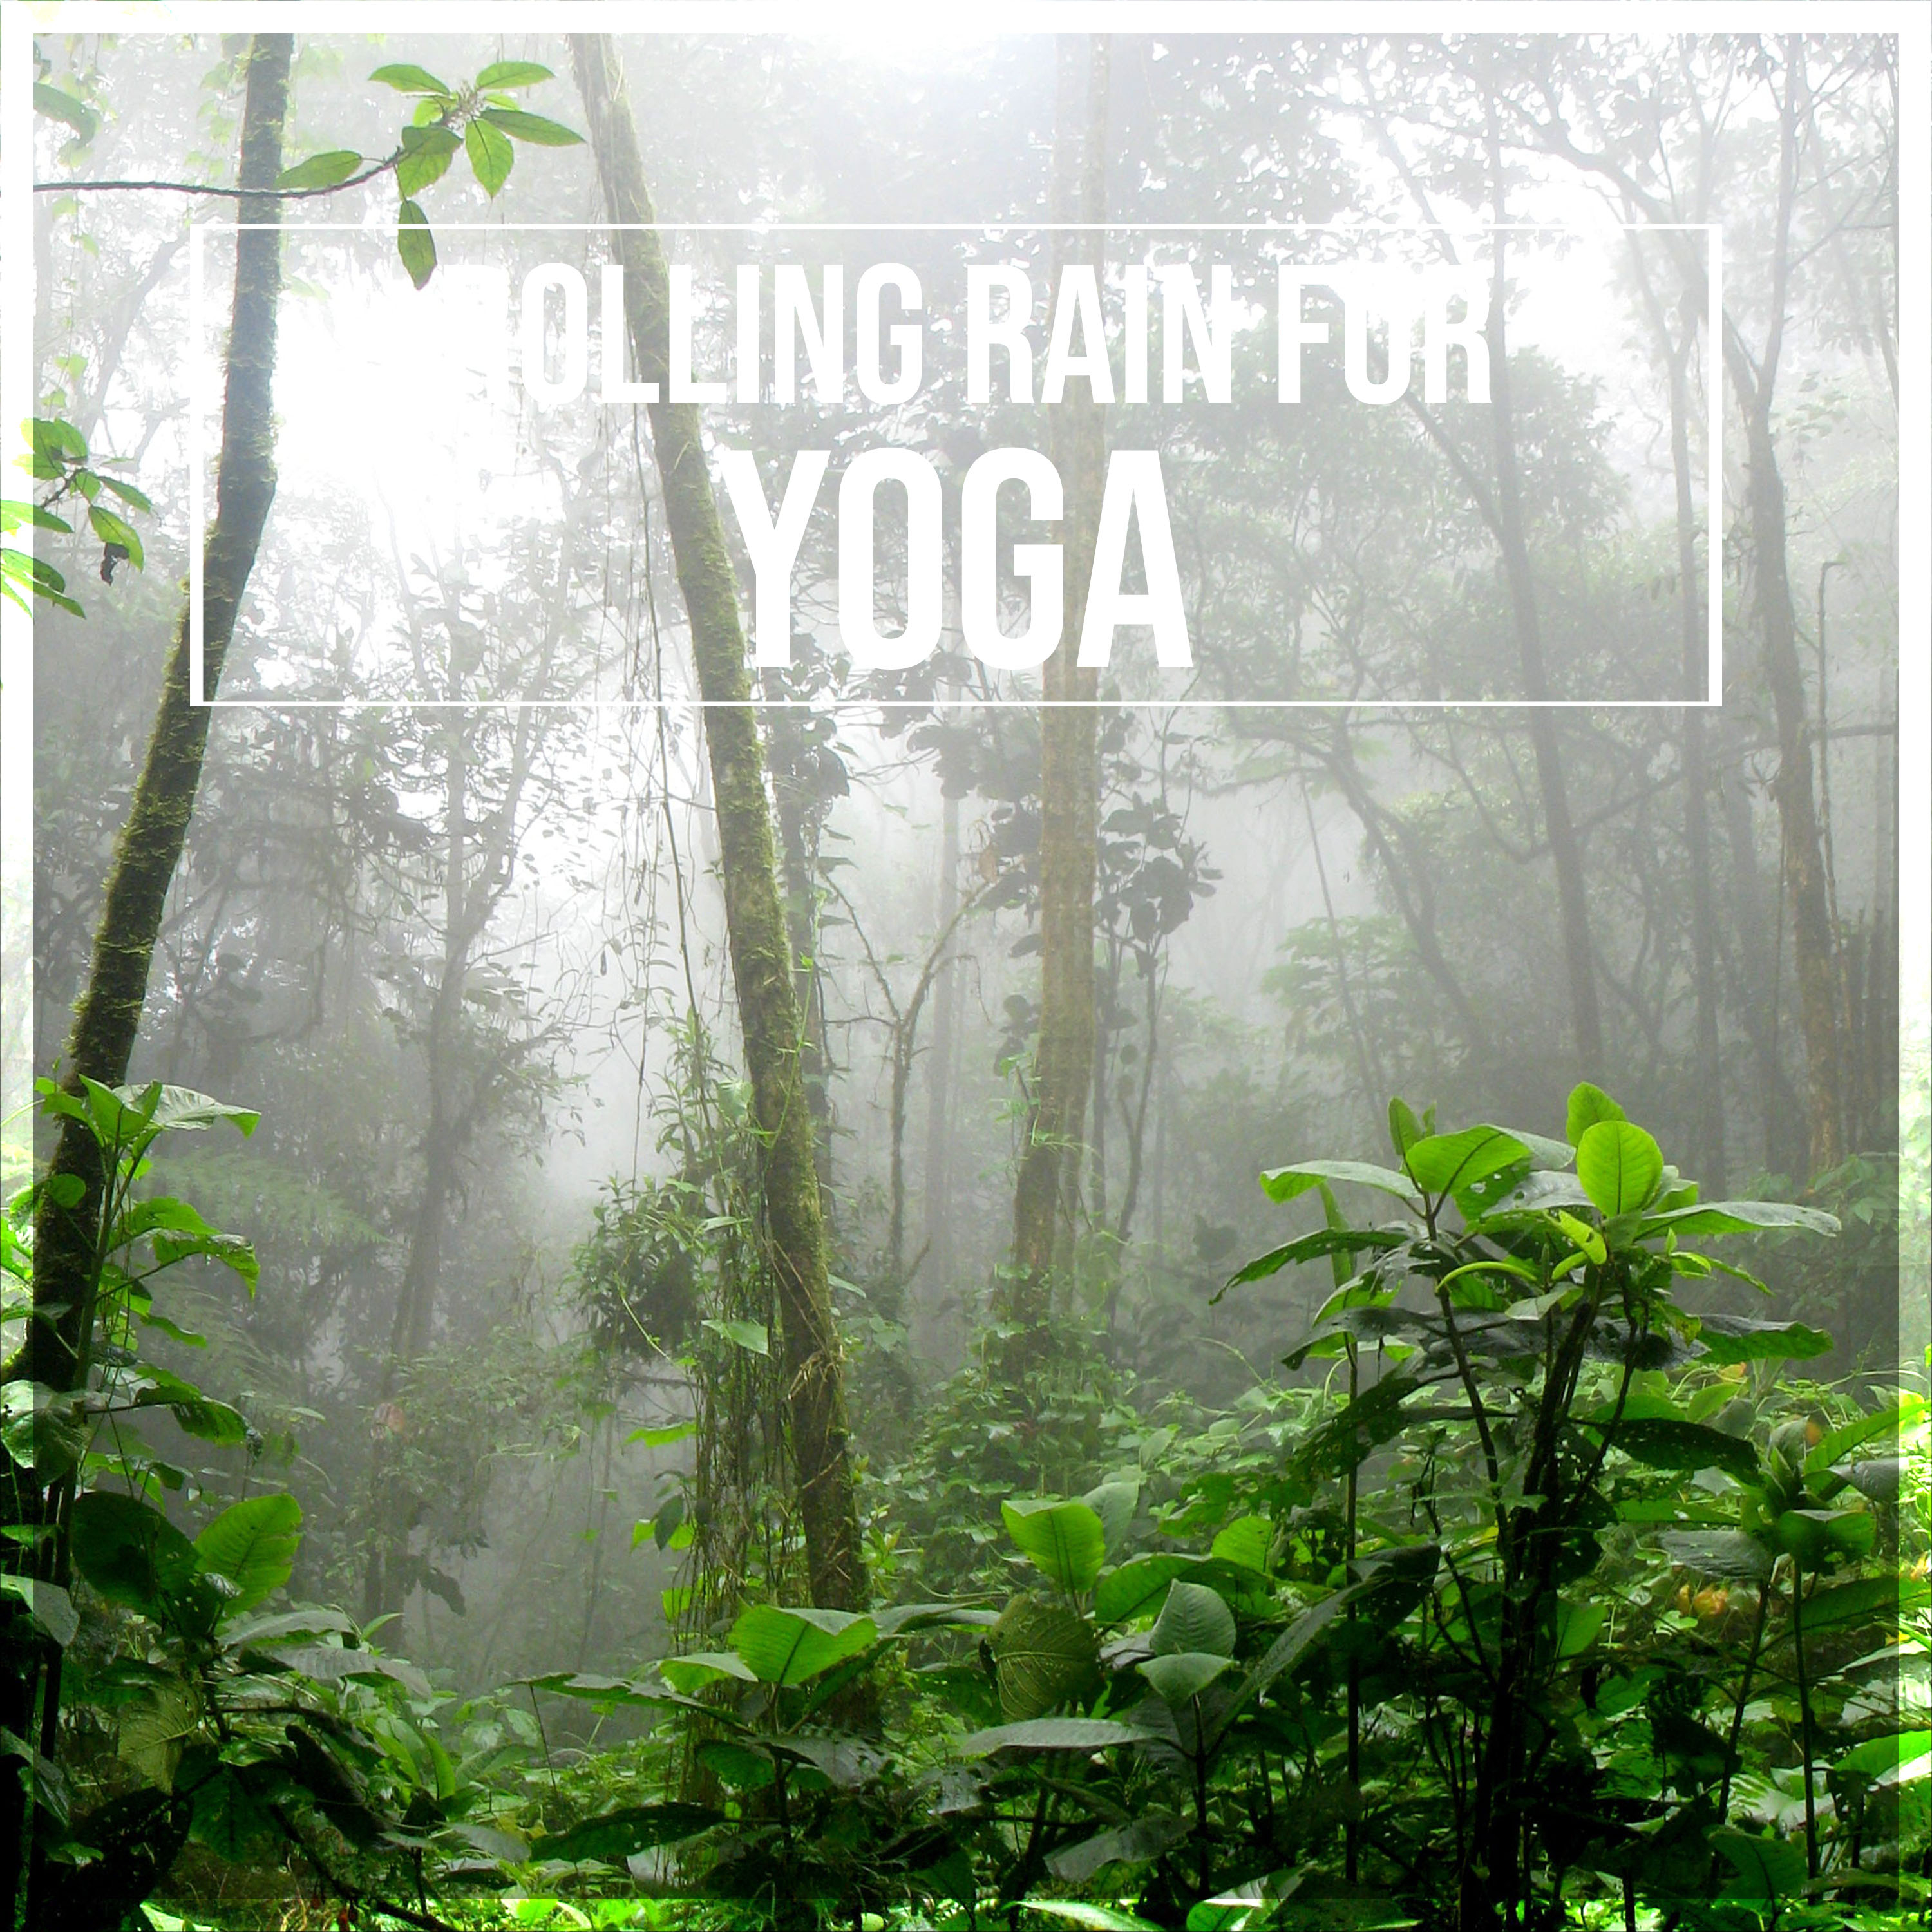 19 Rolling Rain Noises for Practicing Yoga